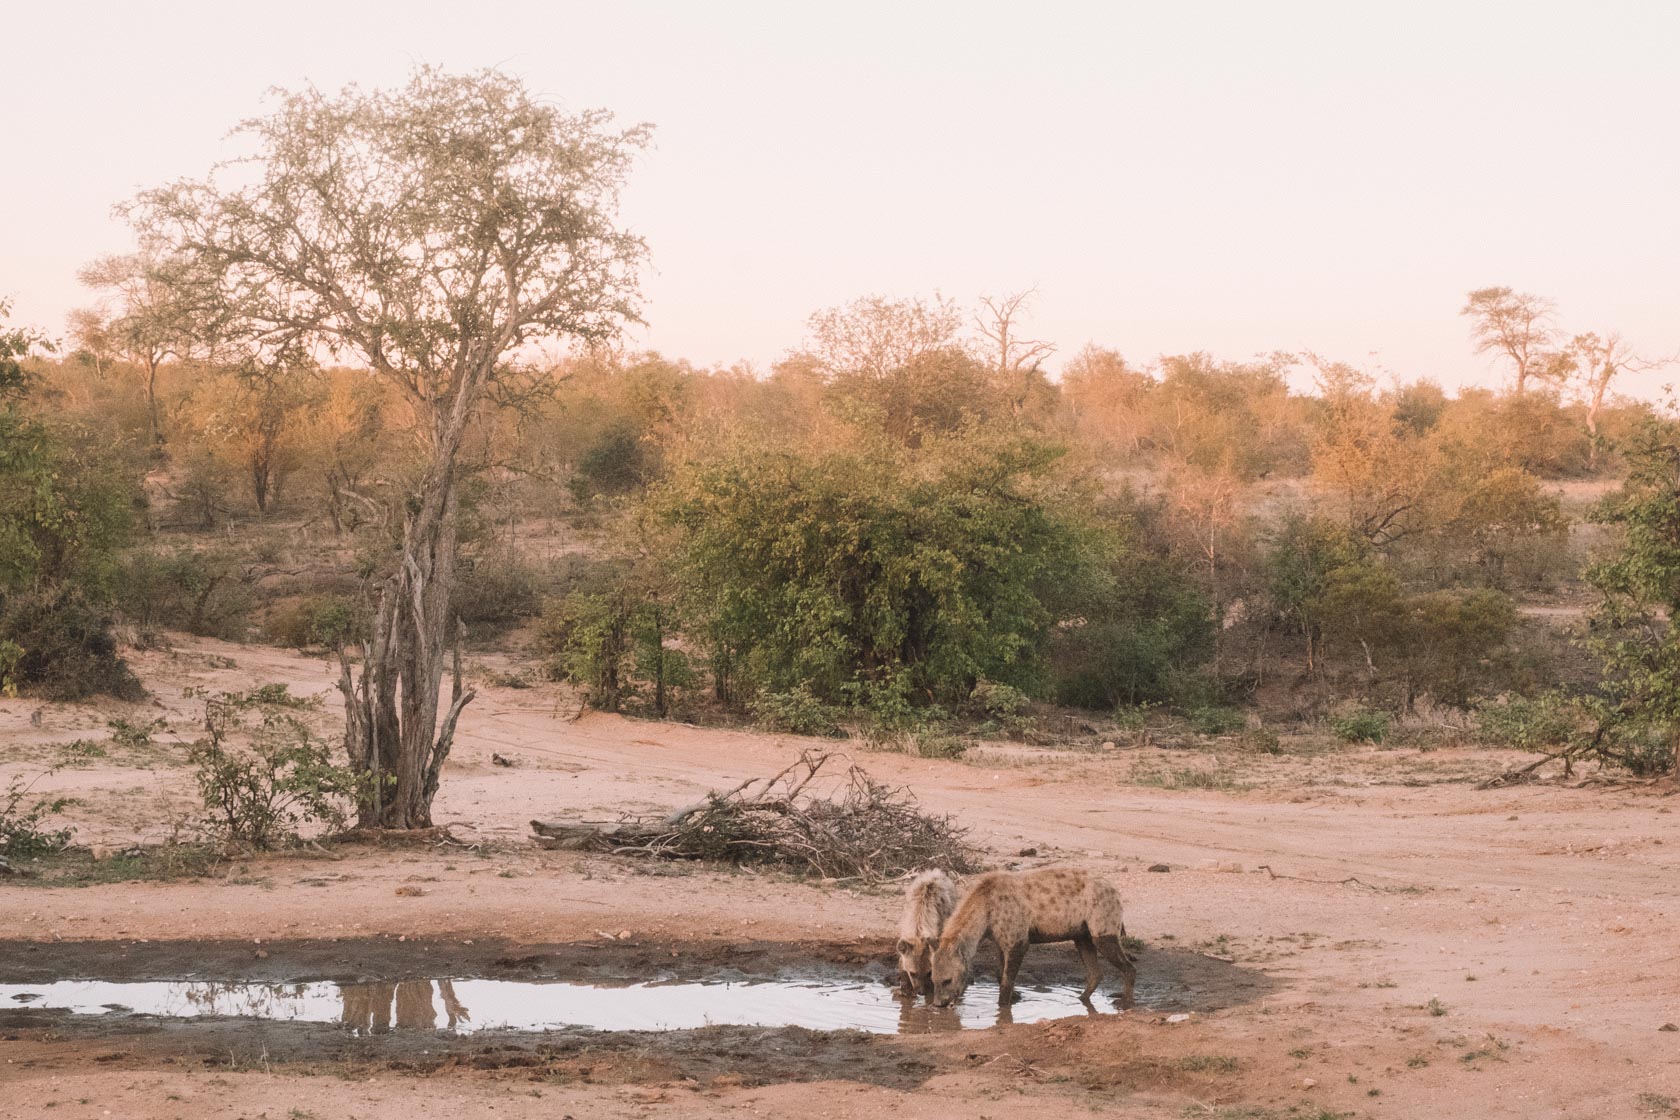 Hyenas on safari